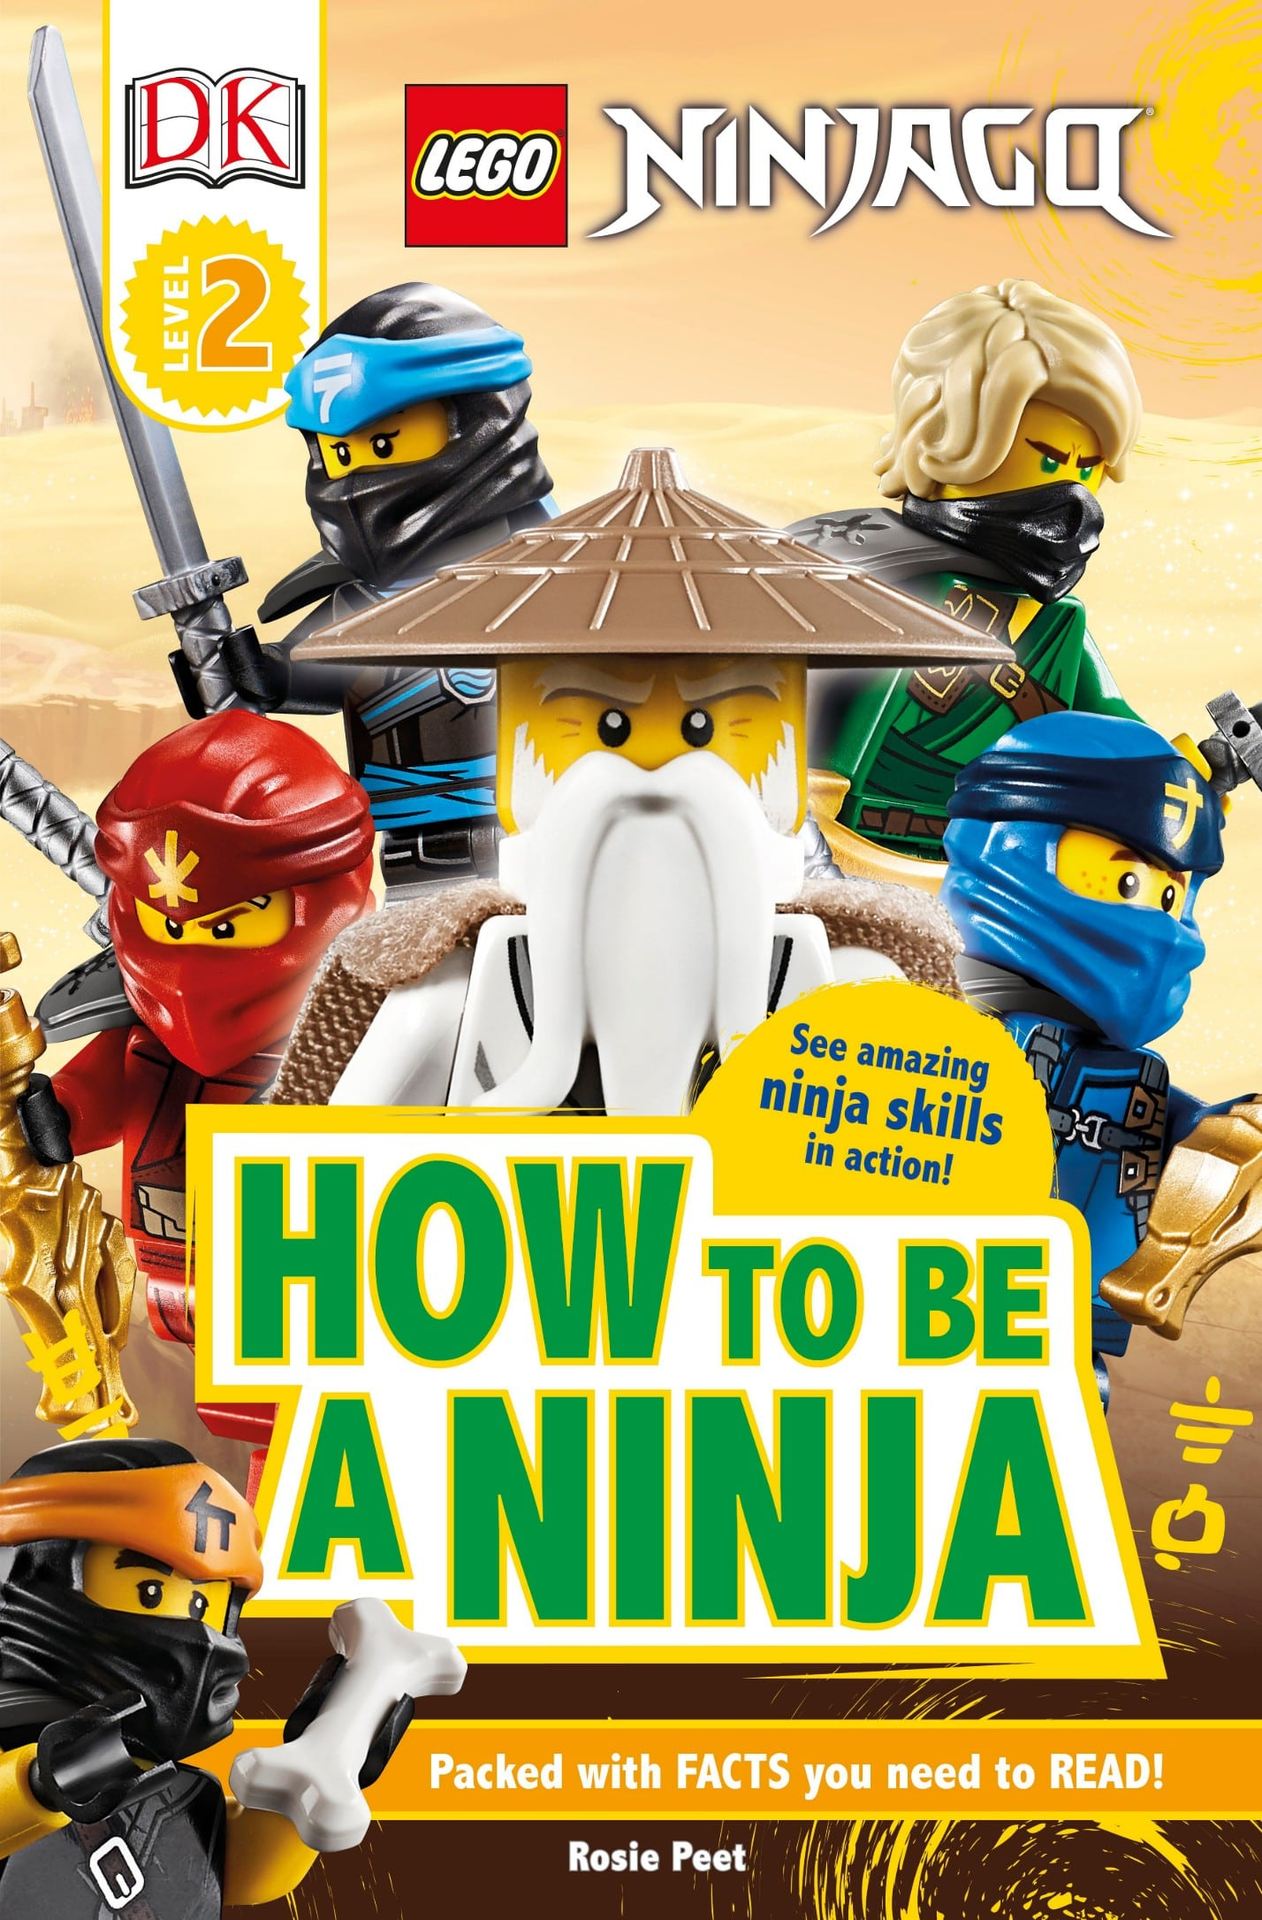 Secret World of the Ninja, Ninjago Wiki